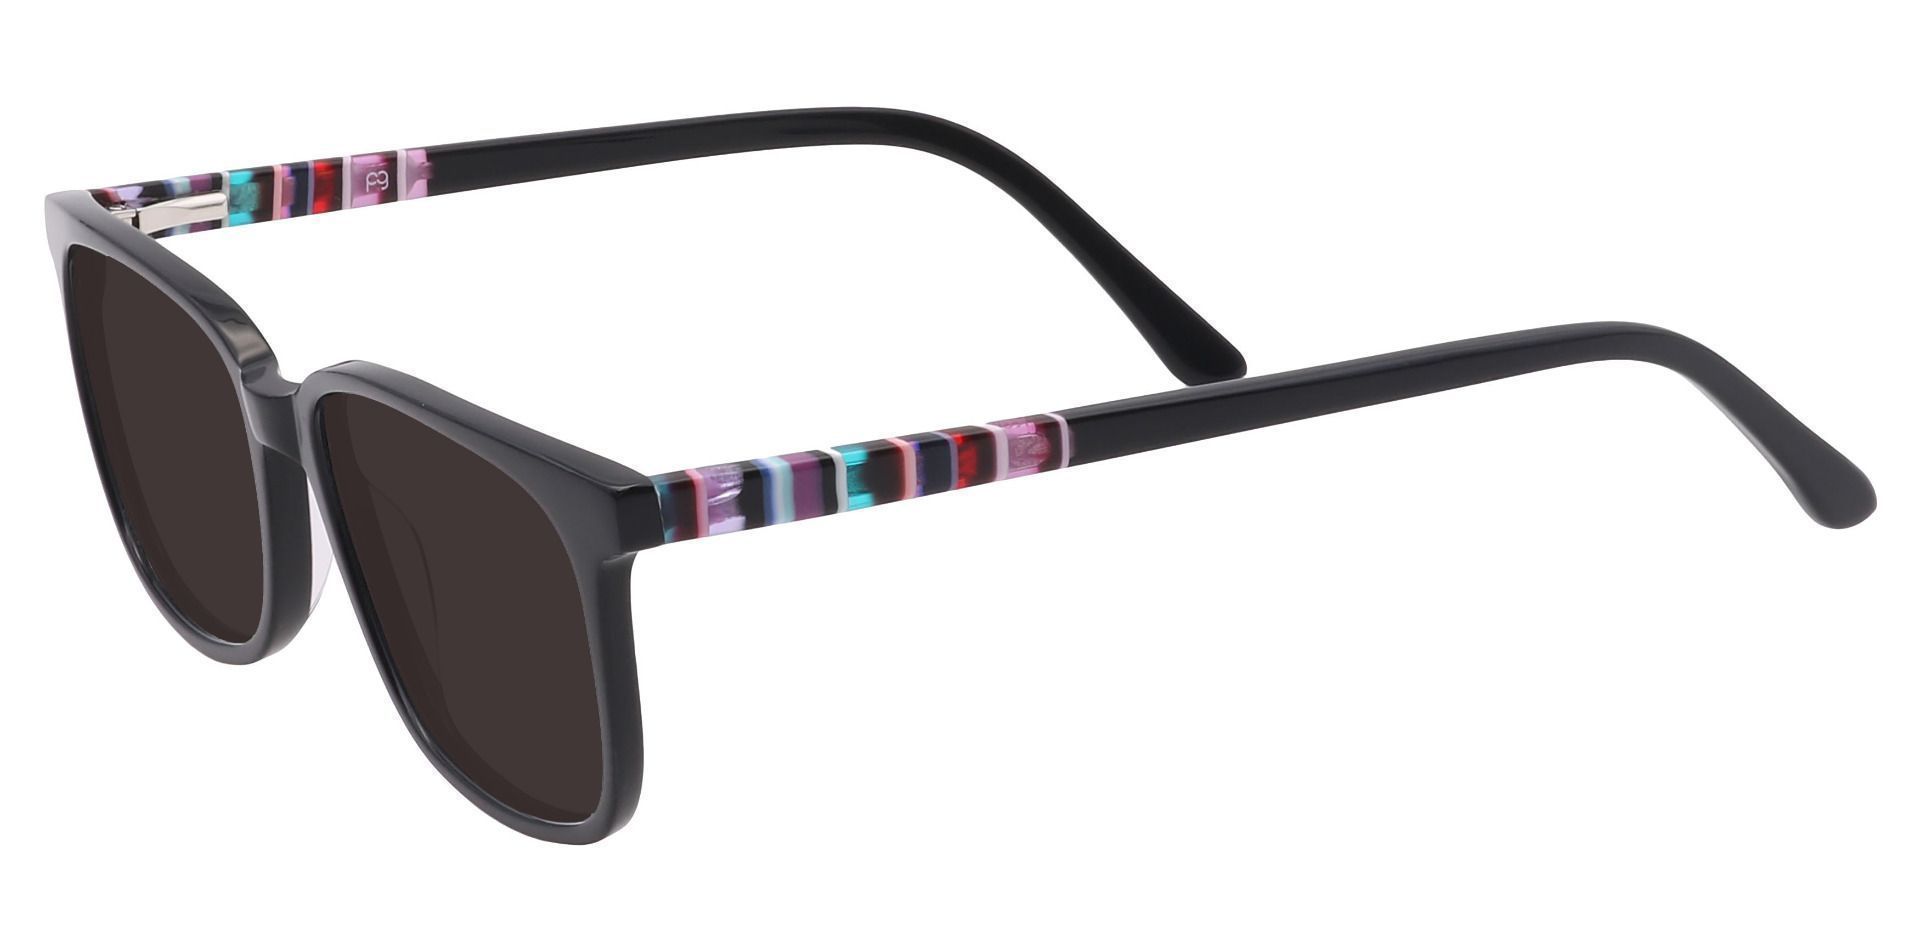 Fern Square Prescription Sunglasses - Black Frame With Gray Lenses